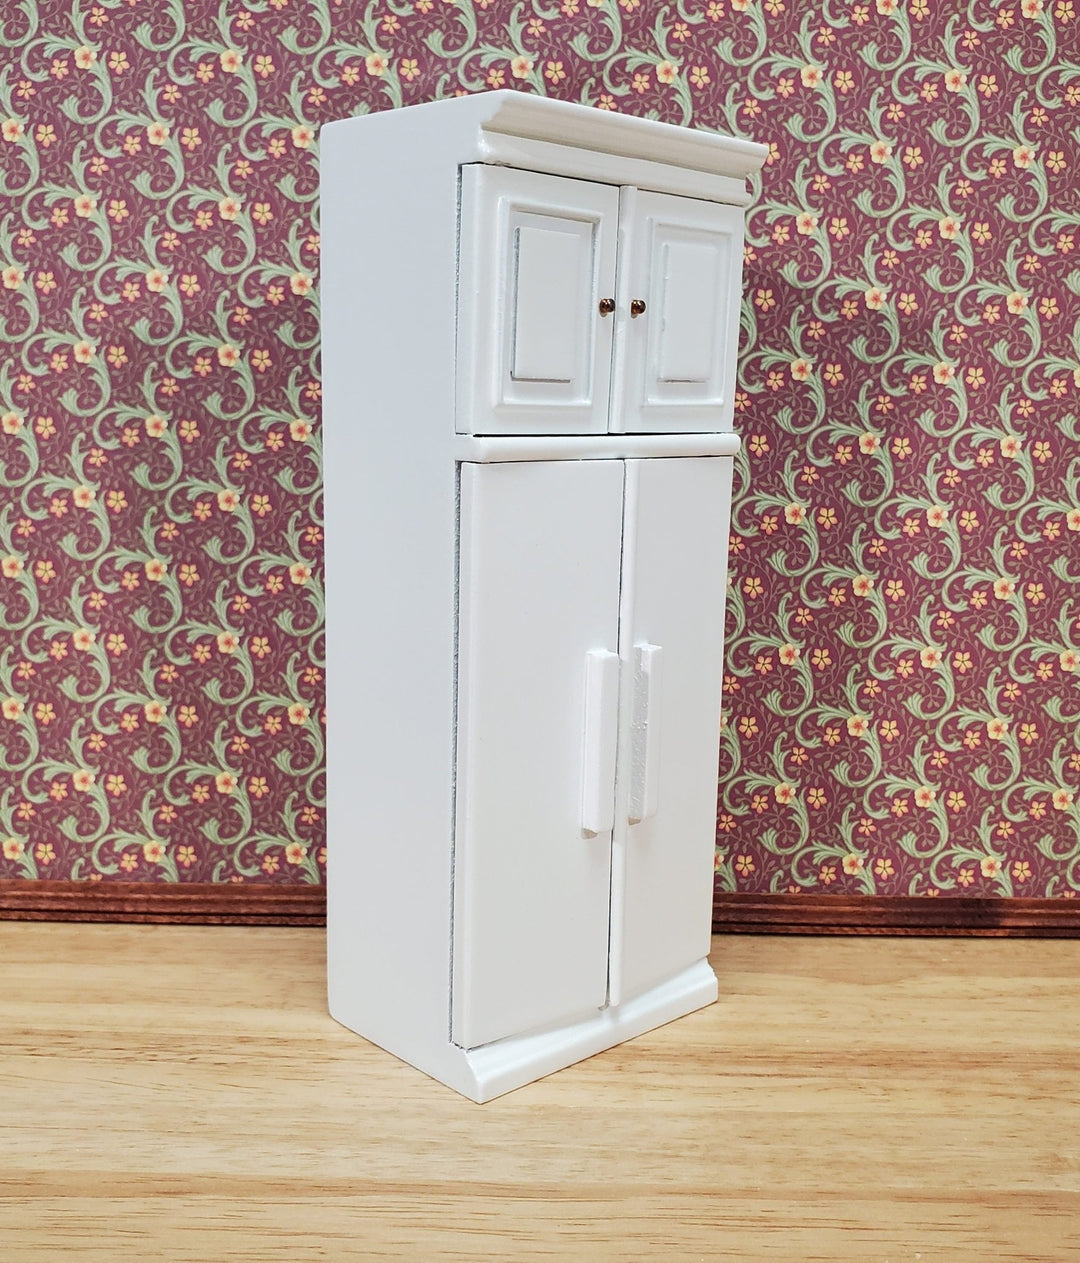 Dollhouse Refrigerator Fridge with Top Cupboard White 1:12 Scale Miniature Kitchen - Miniature Crush